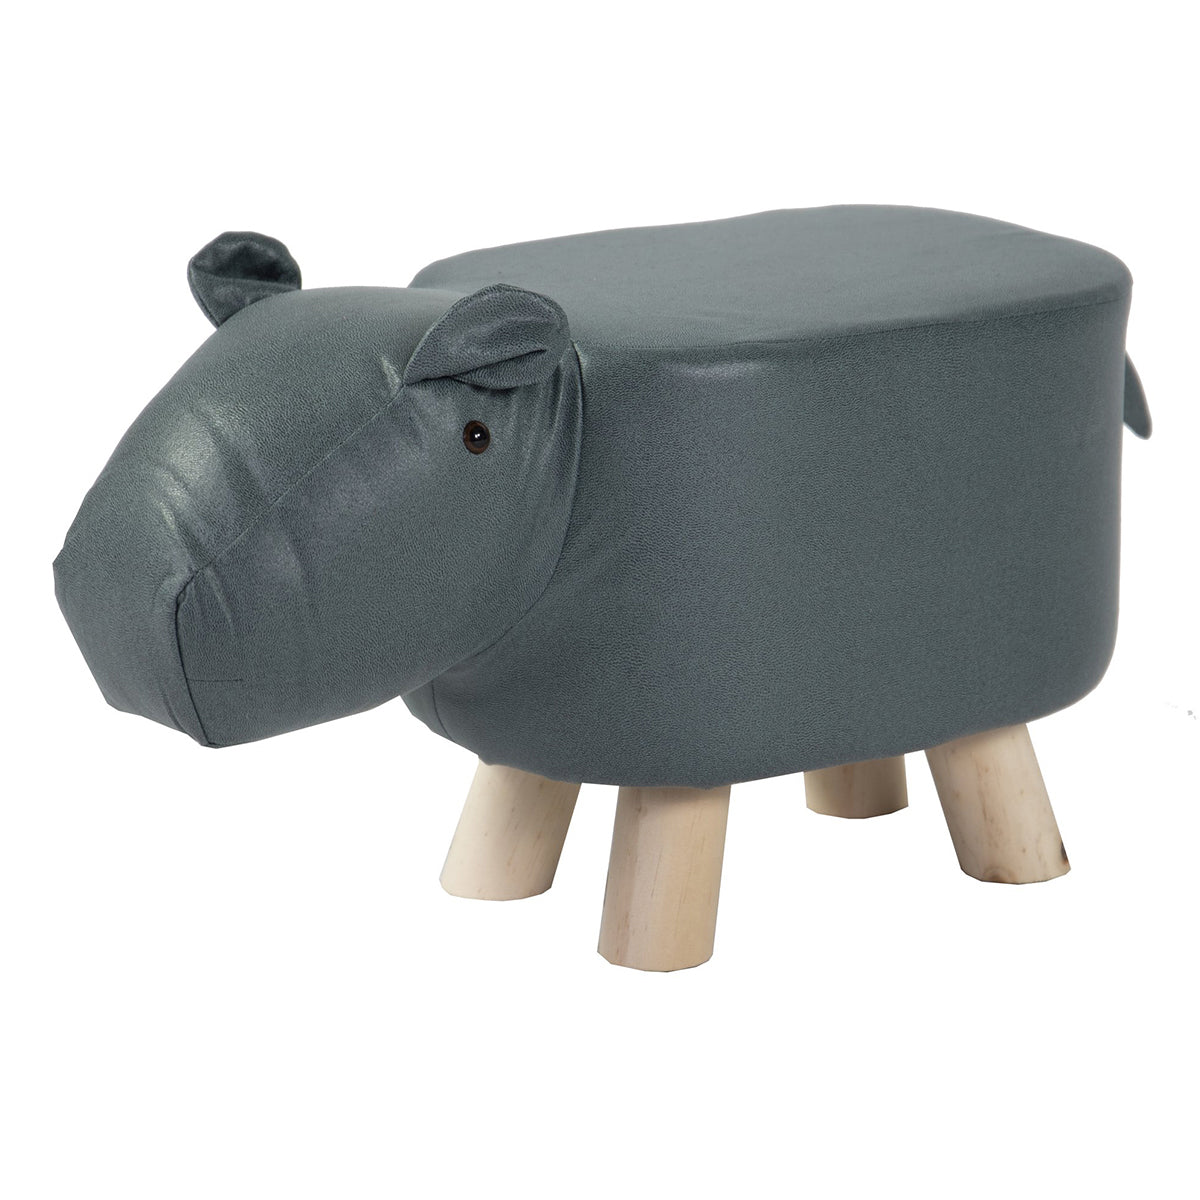 Tierhocker Hippo blaugrau Kinderhocker Tier Hocker Holz Kinder Sitzhocker Hippo